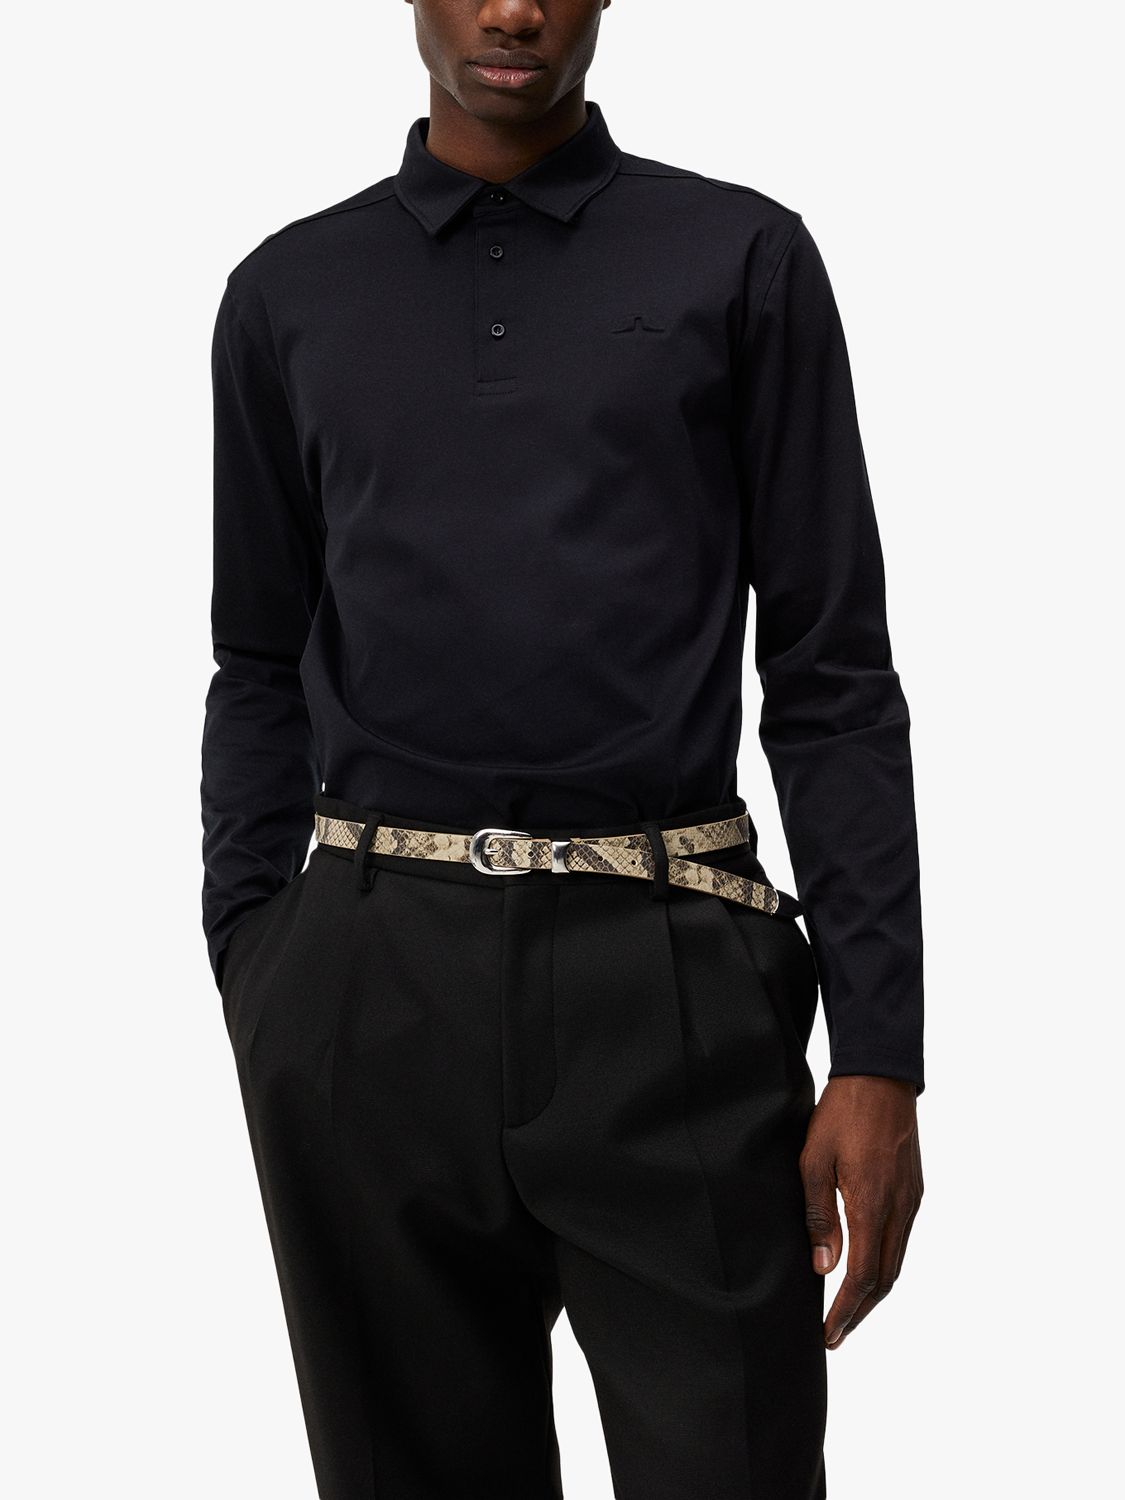 J.Lindeberg Asher Long Sleeve Polo Shirt, Black, S